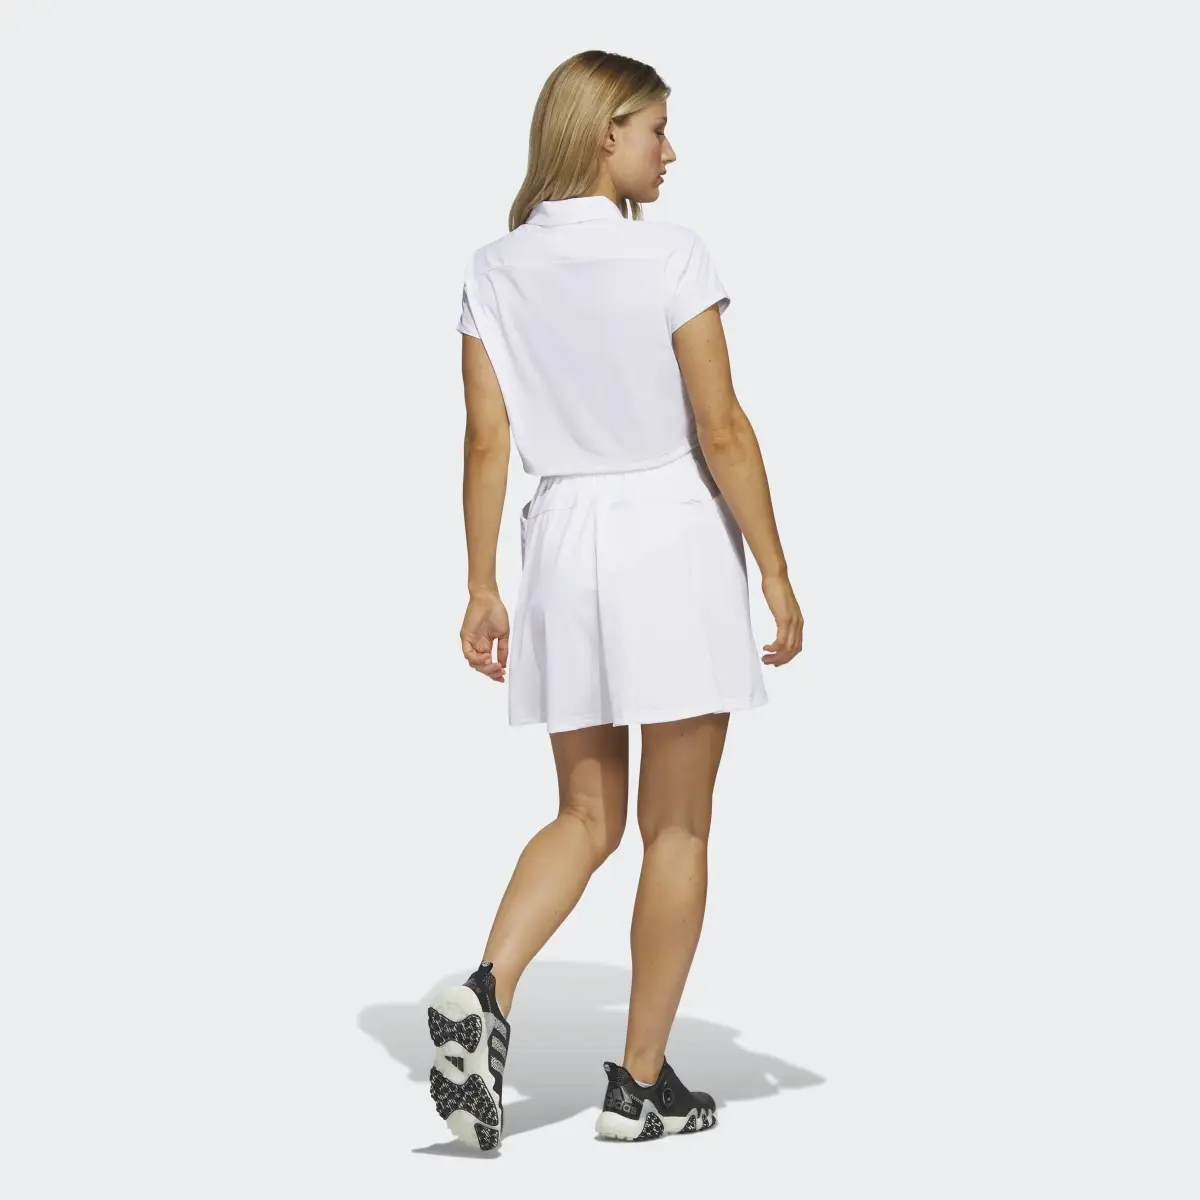 Adidas Go-To Golf Dress. 3